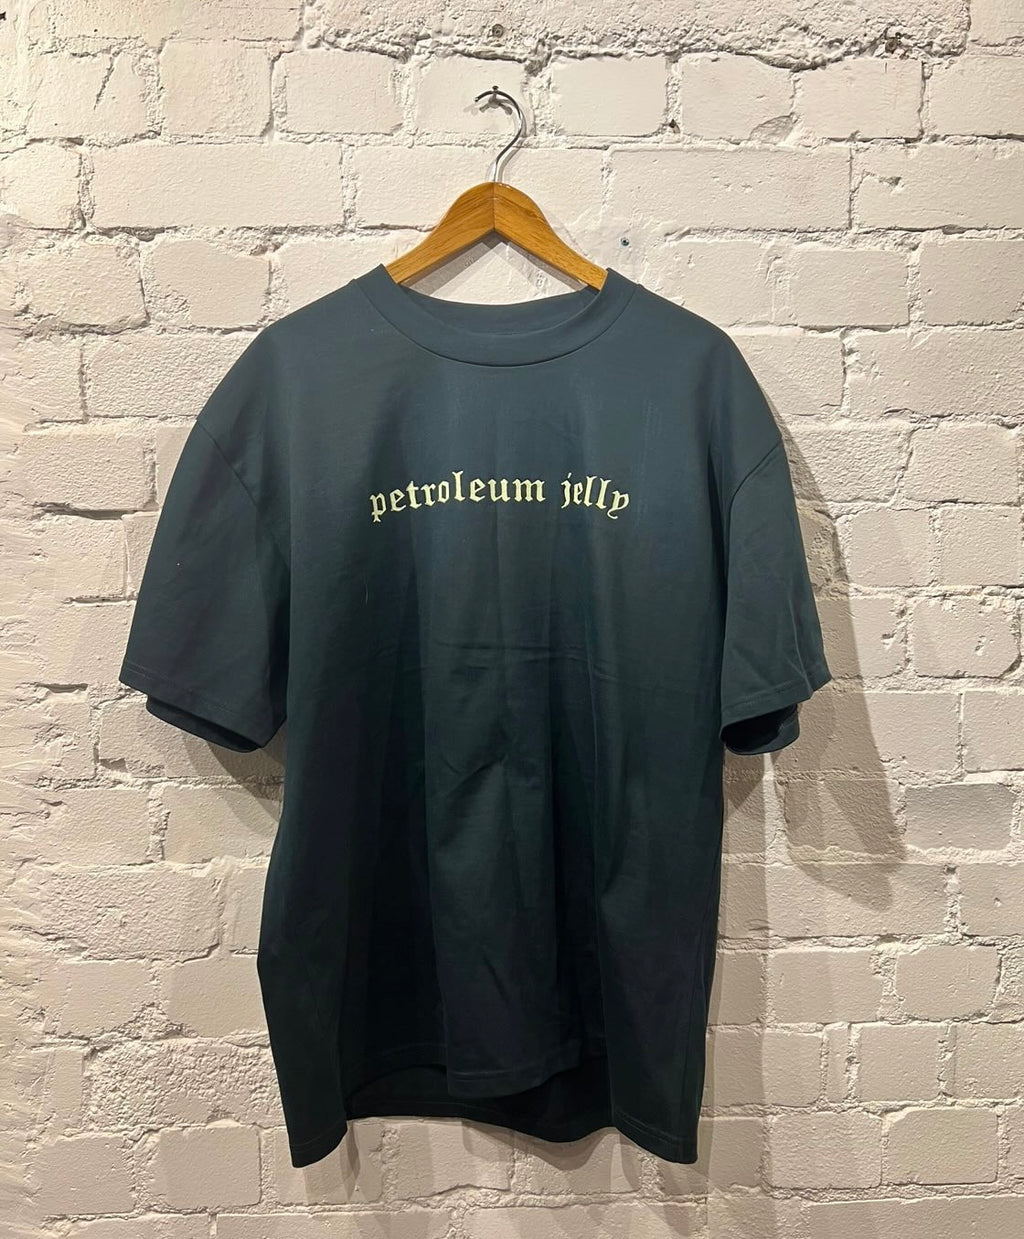 PETROLEUM JELLY t-shirt by Juju